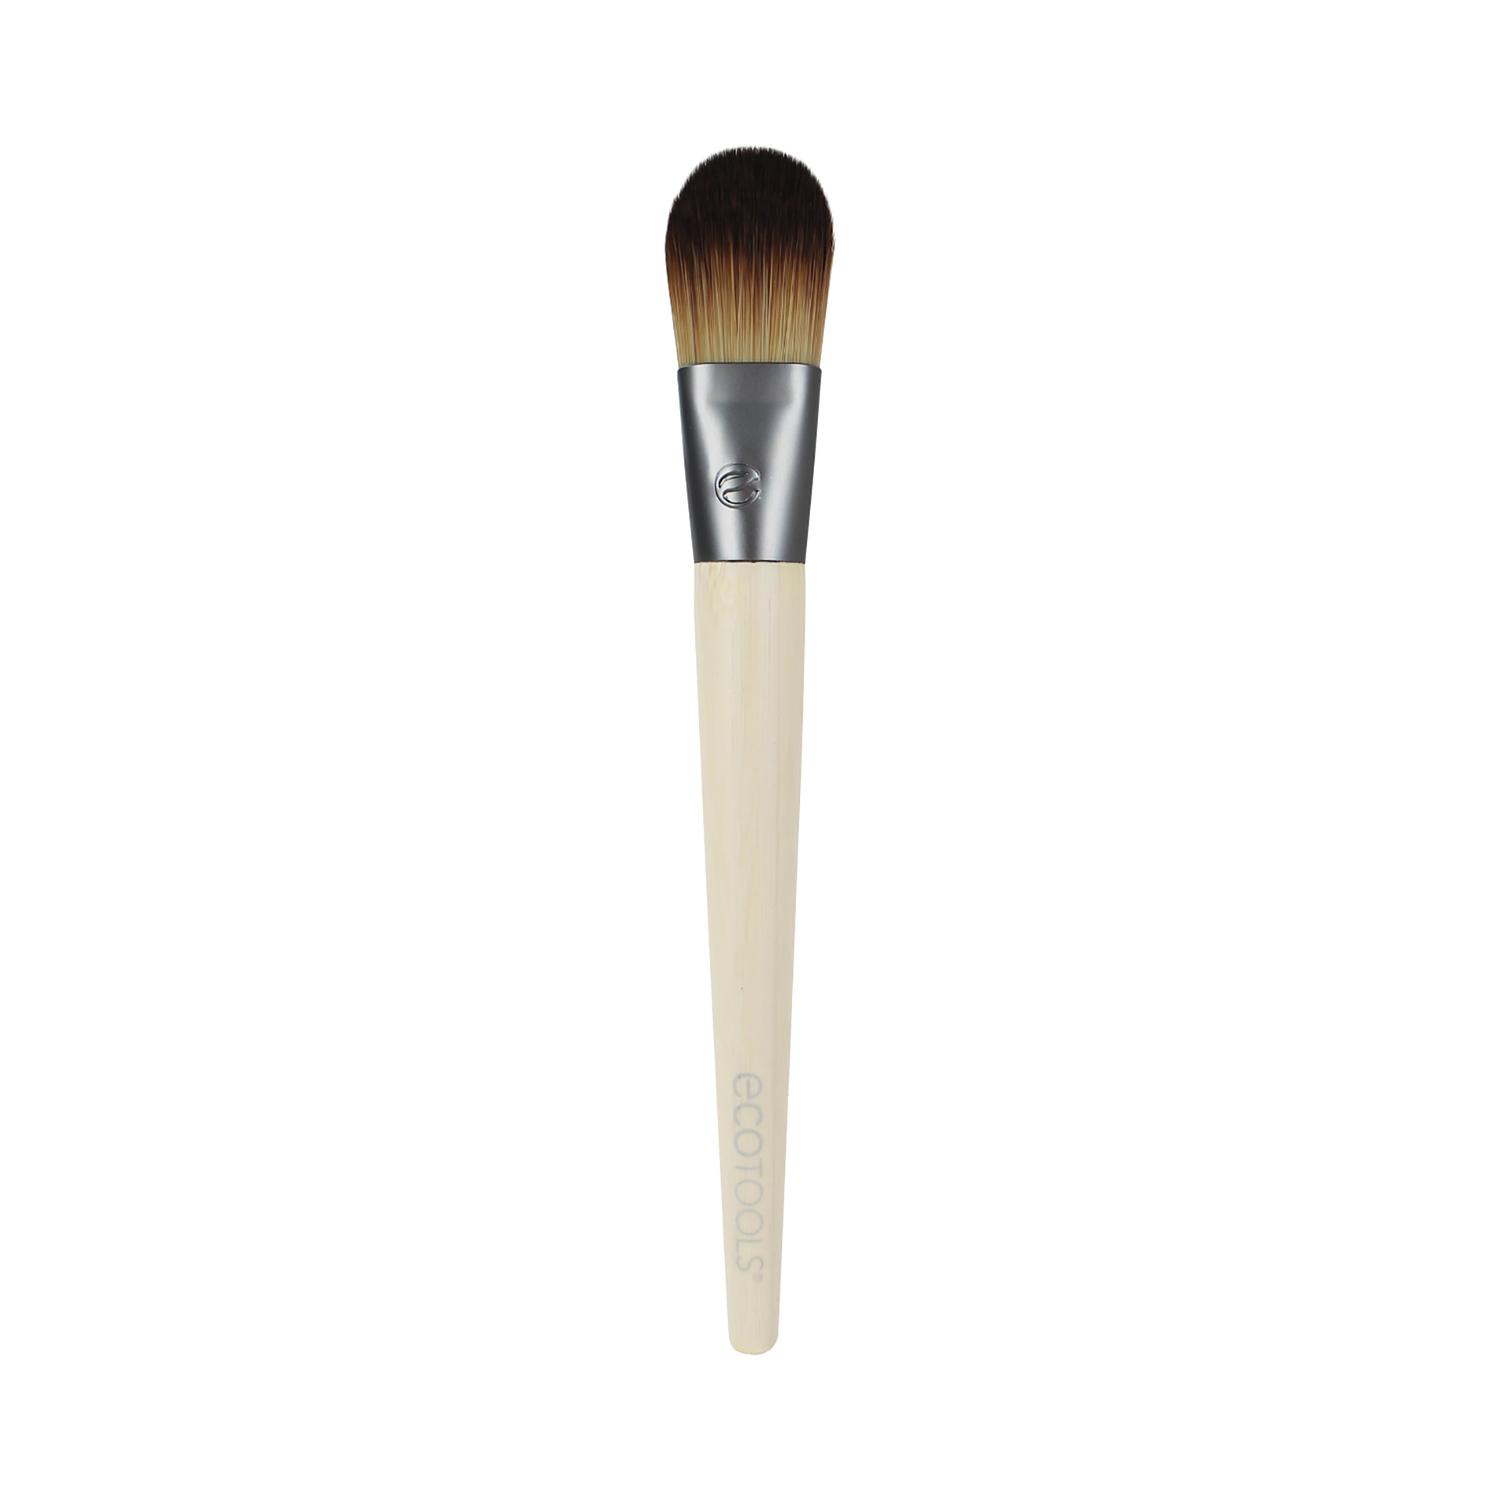 Ecotools | Ecotools Flat Foundation Makeup Brush - Beige (1 pc)